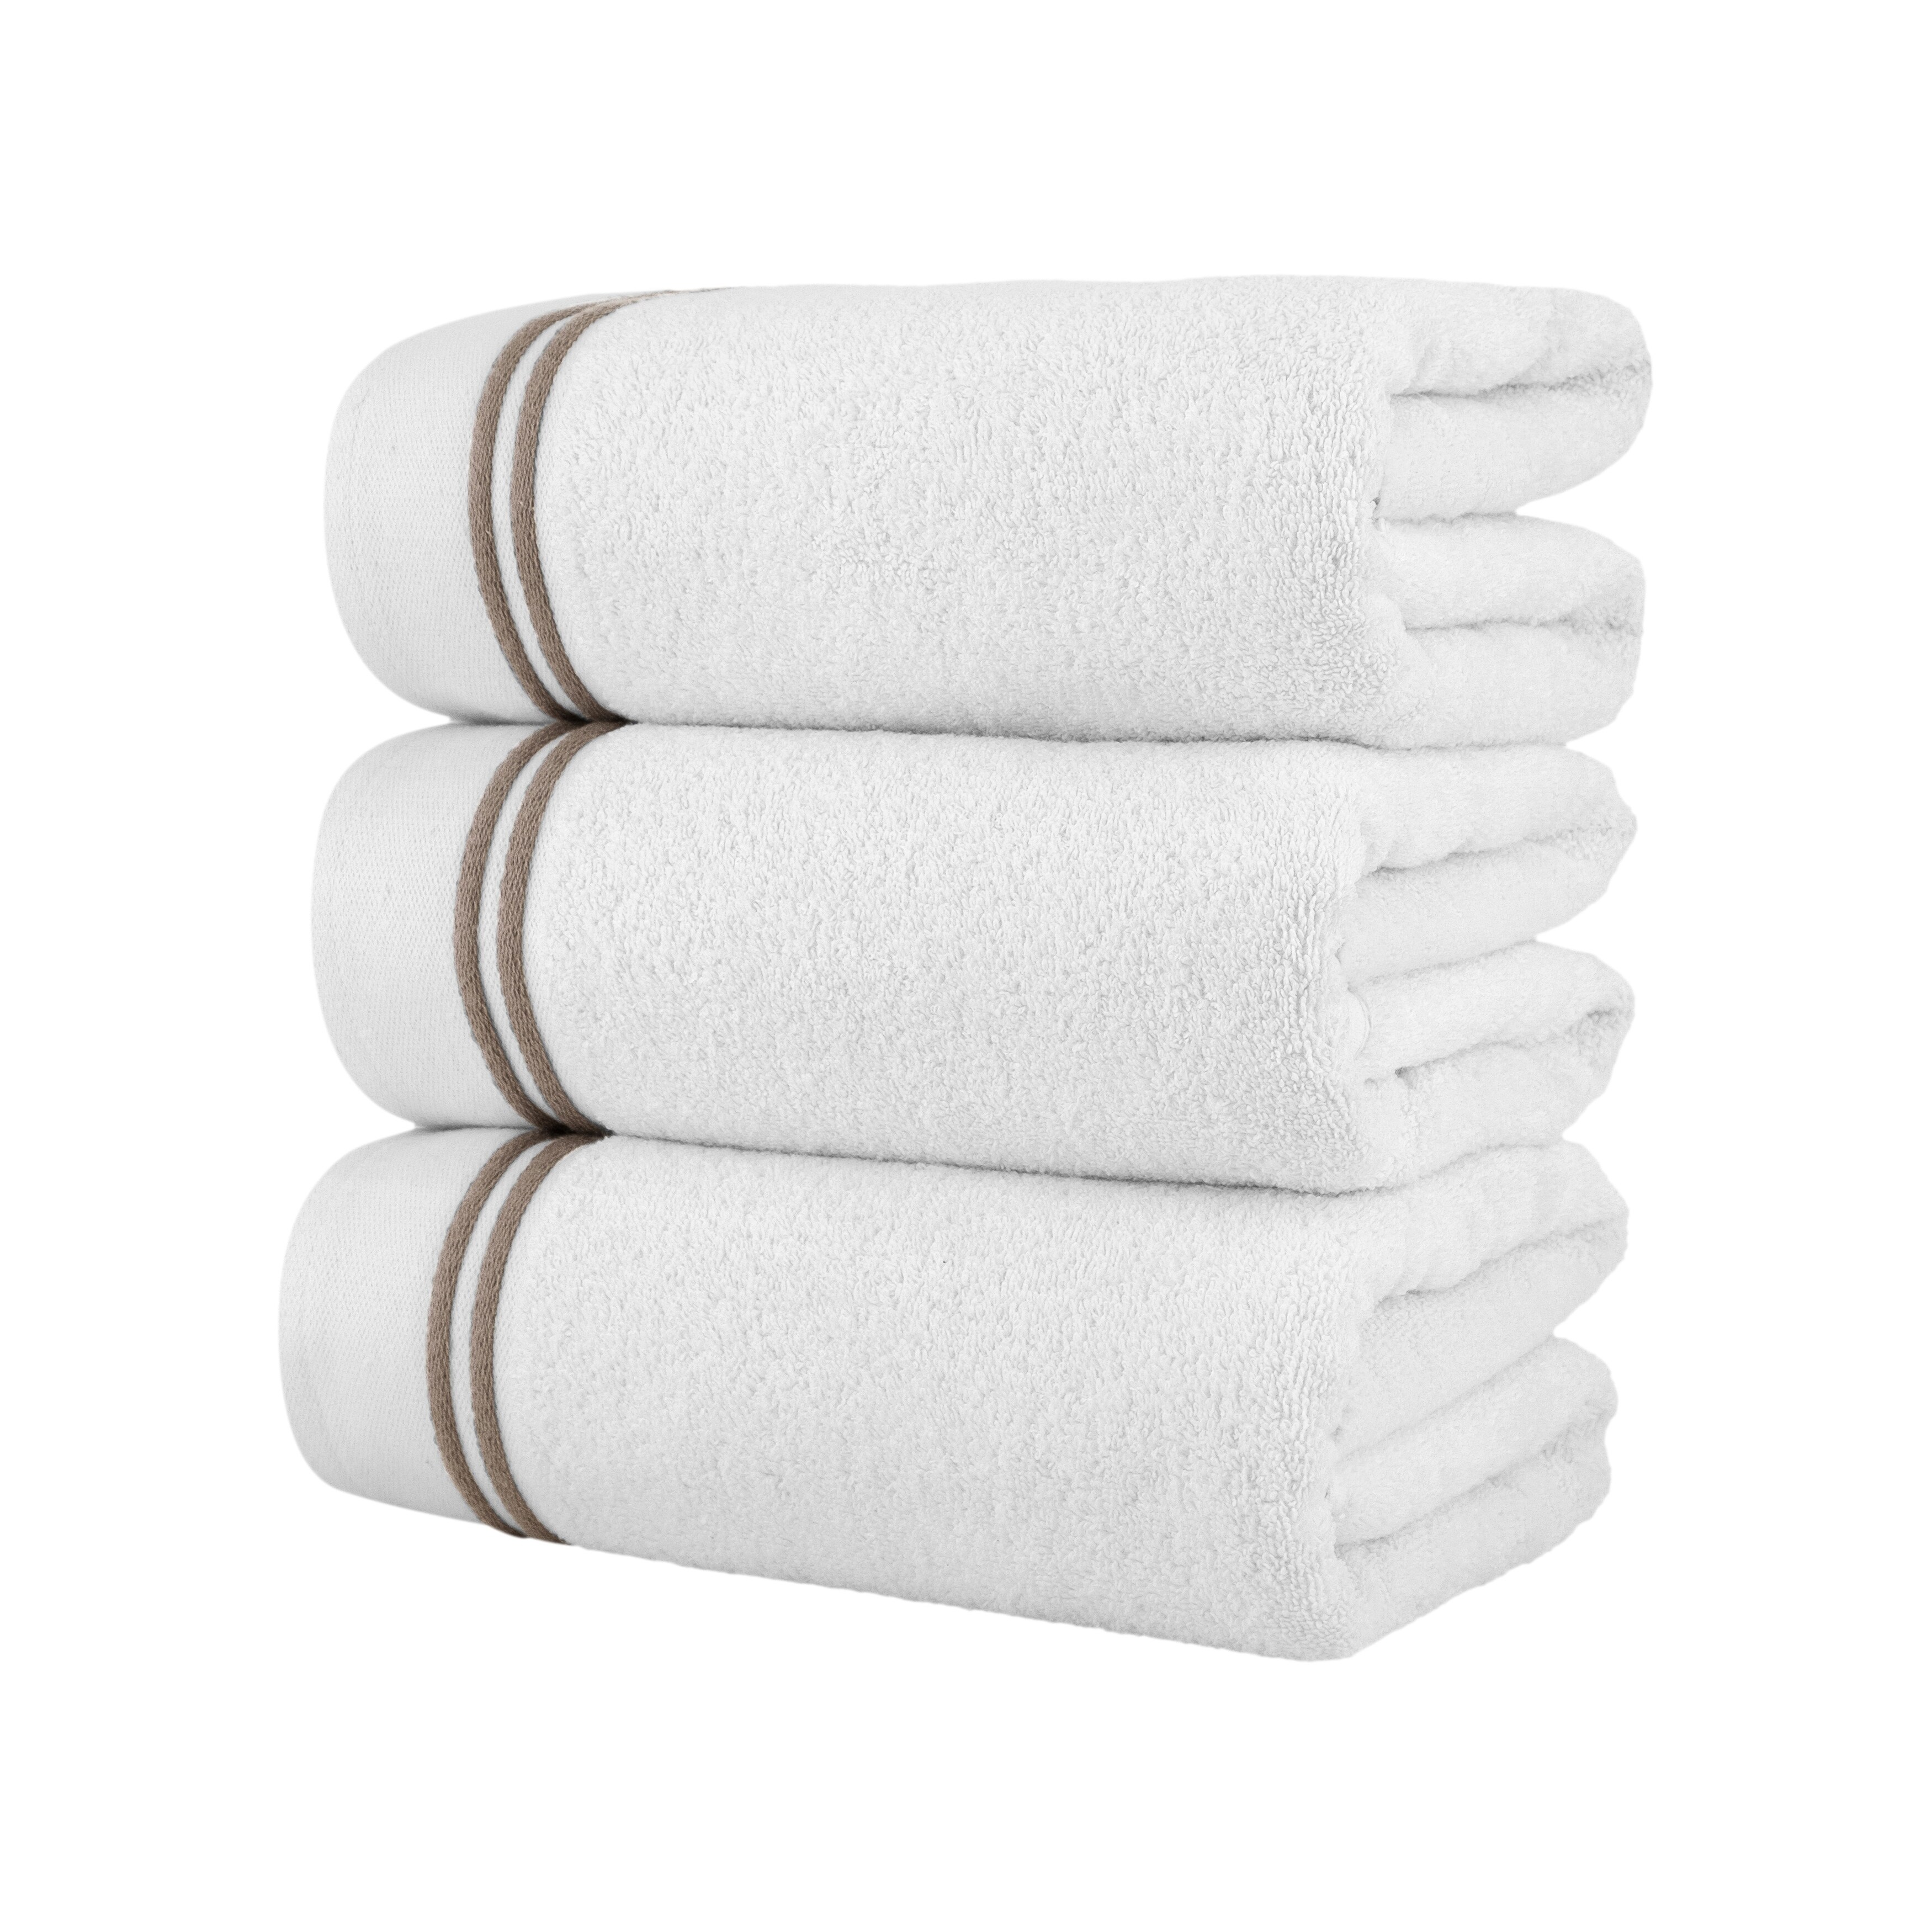 https://ak1.ostkcdn.com/images/products/is/images/direct/c801c0923f6de059c2854d5fdb13e19edb492280/Chic-Home-3-Piece-Standard-100-Oeko-Tex-Certified-Bath-Towel-Set.jpg